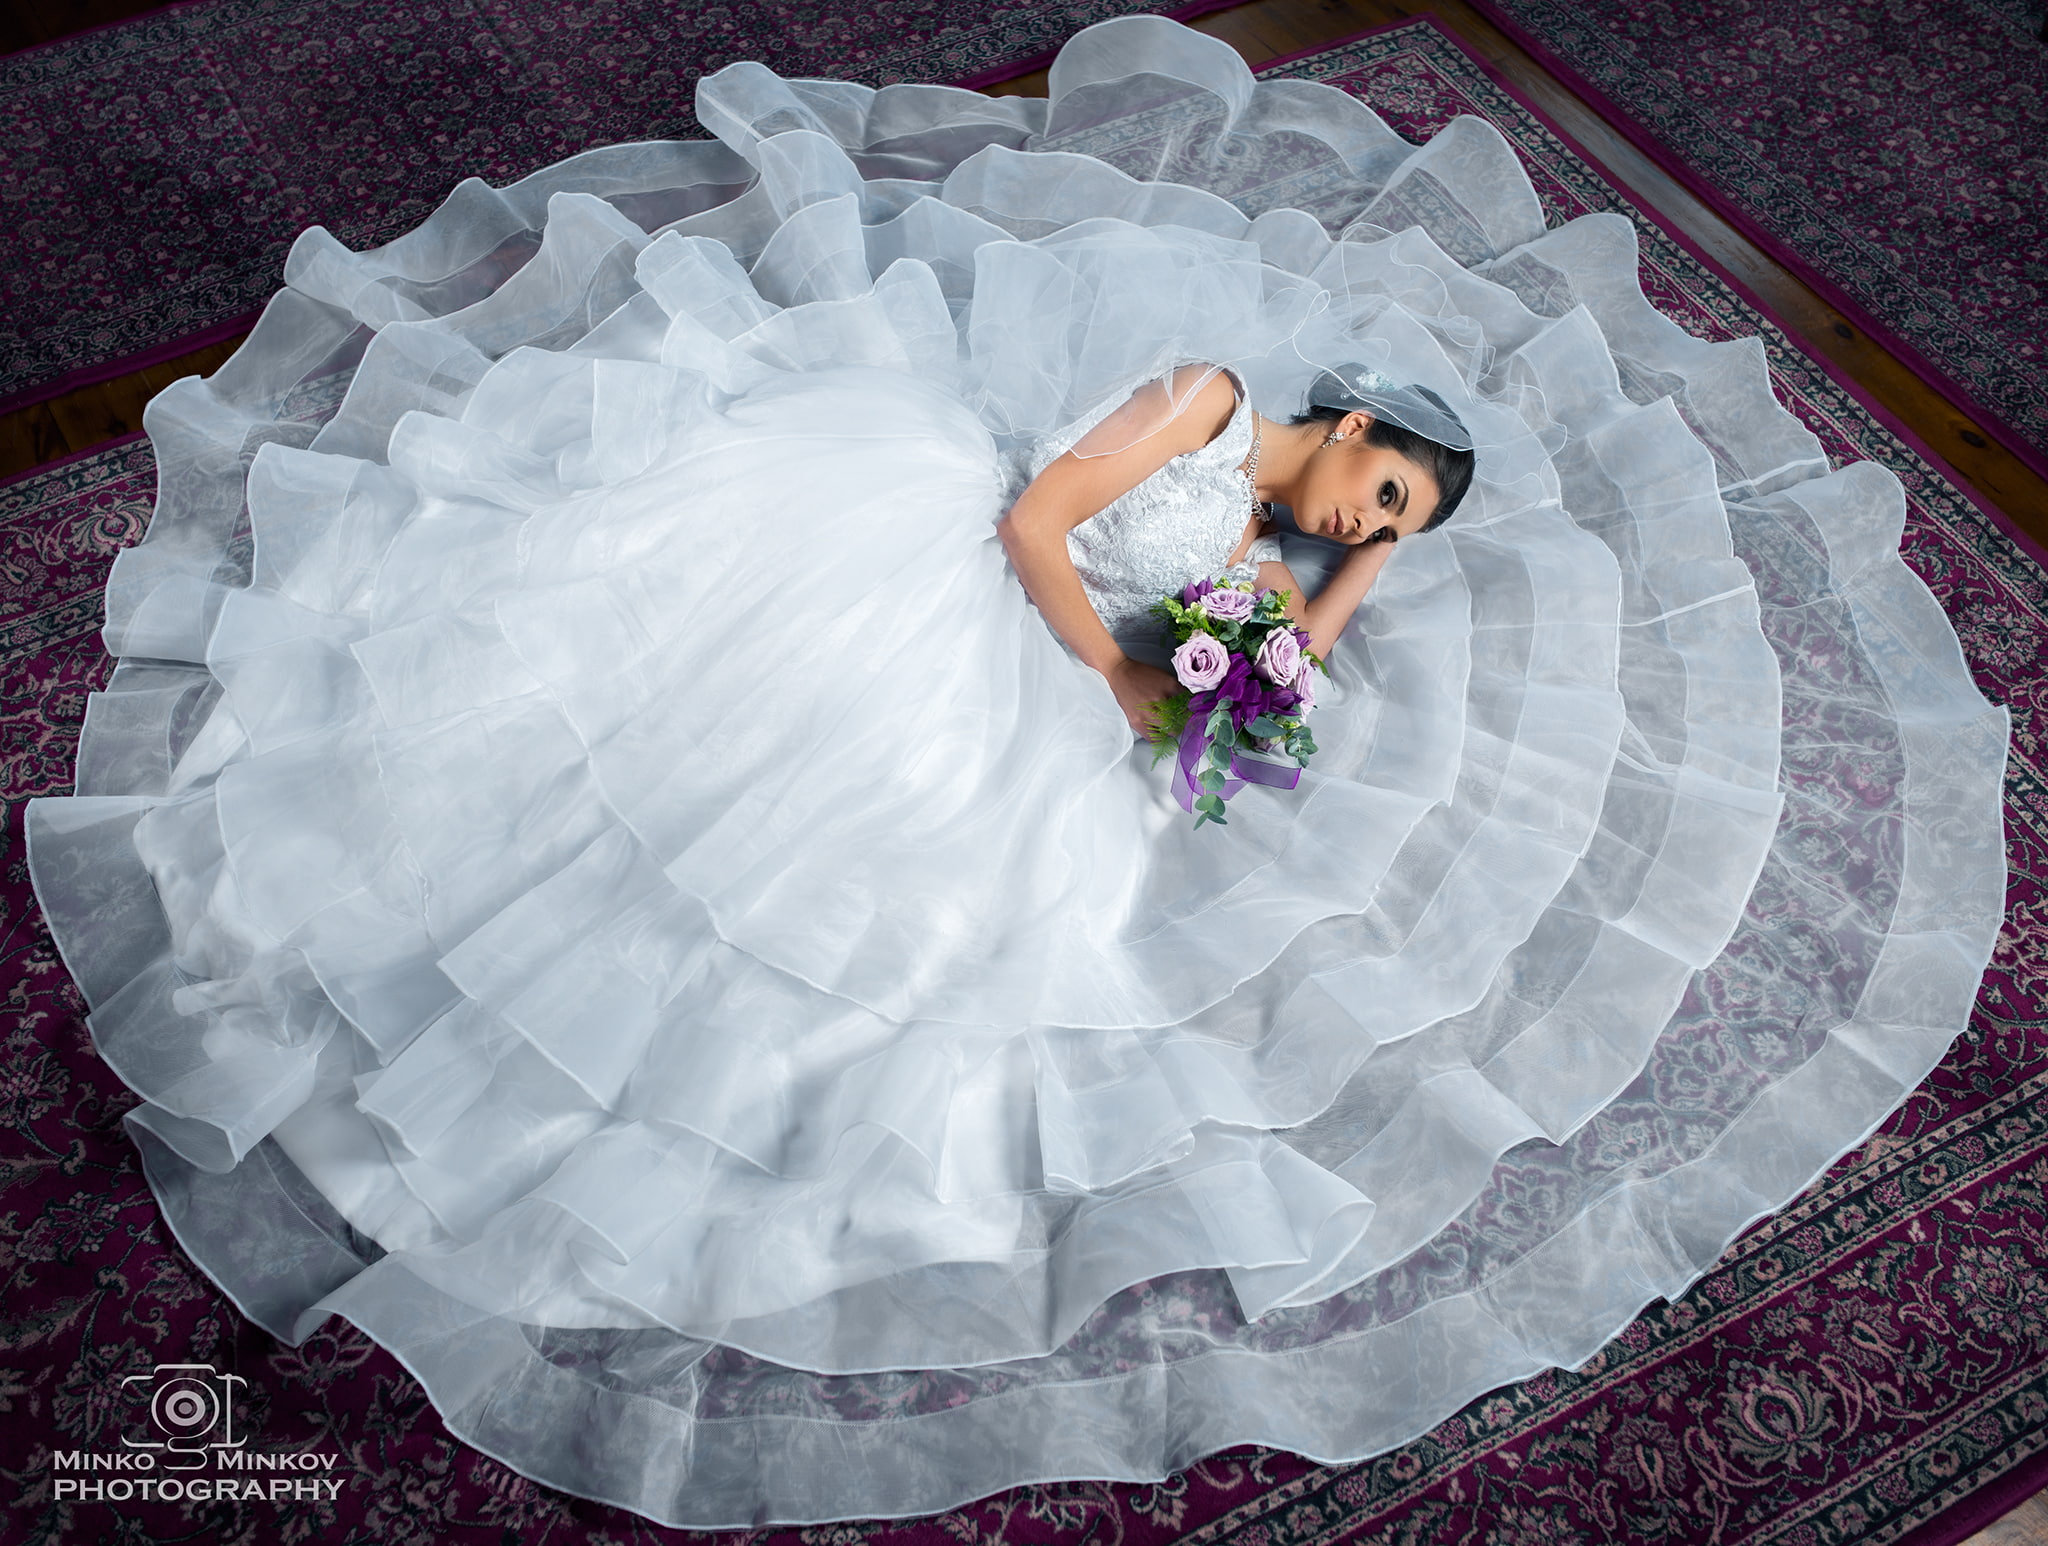 Minko Minkov, flowers, bouquets, white dress, frock, brides